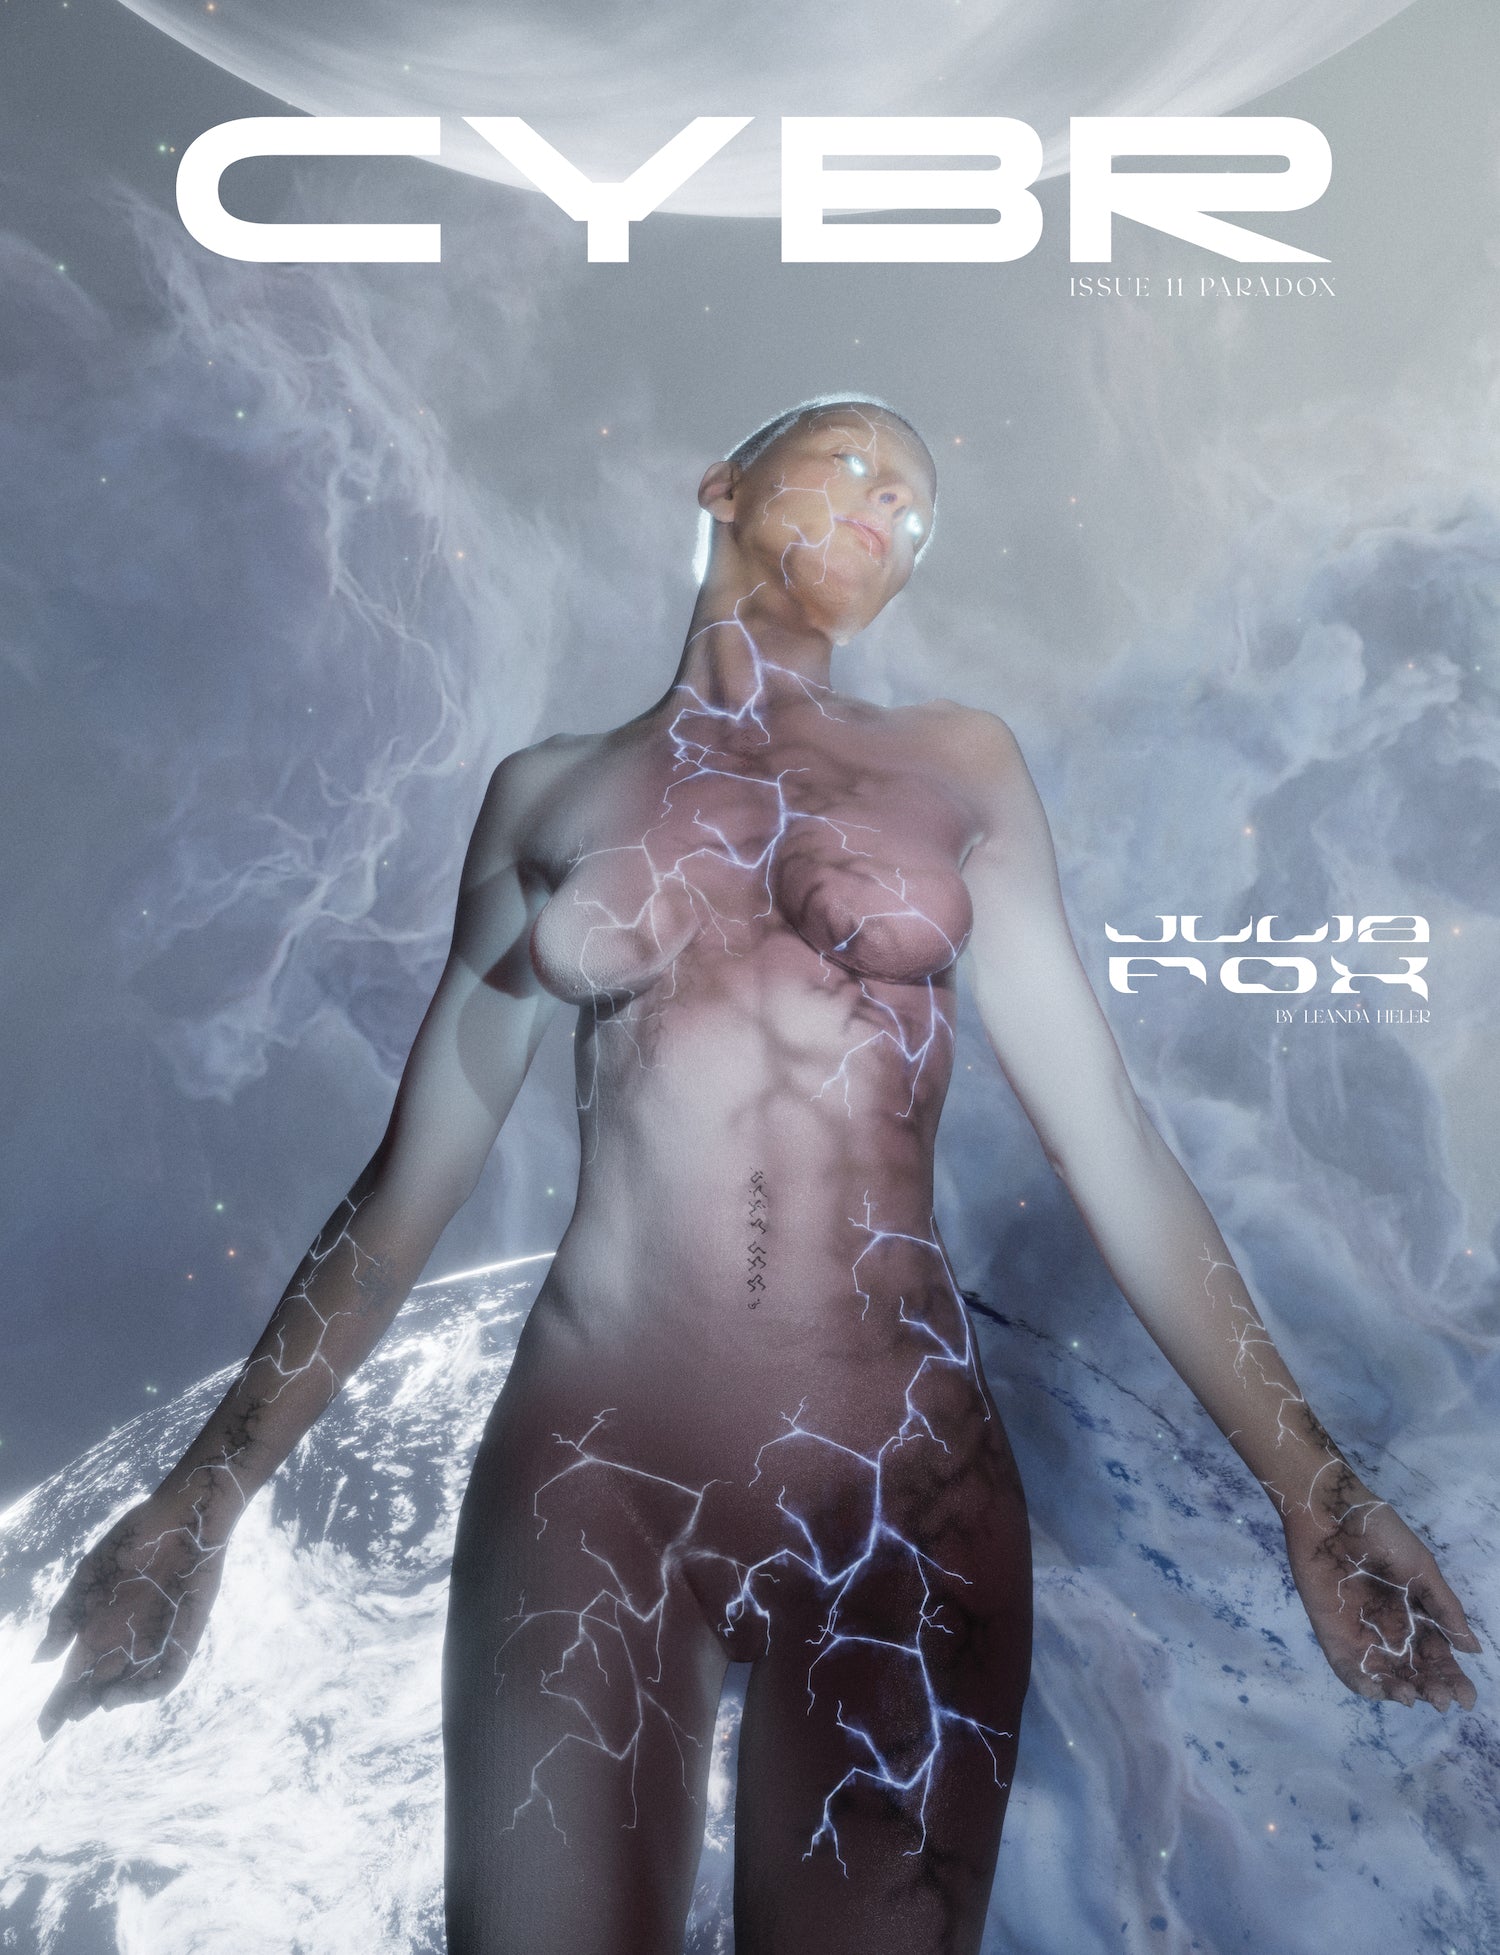 CYBR MAGAZINE ISSUE 11 PRINT - JULIA FOX - COLLECTOR'S COVER